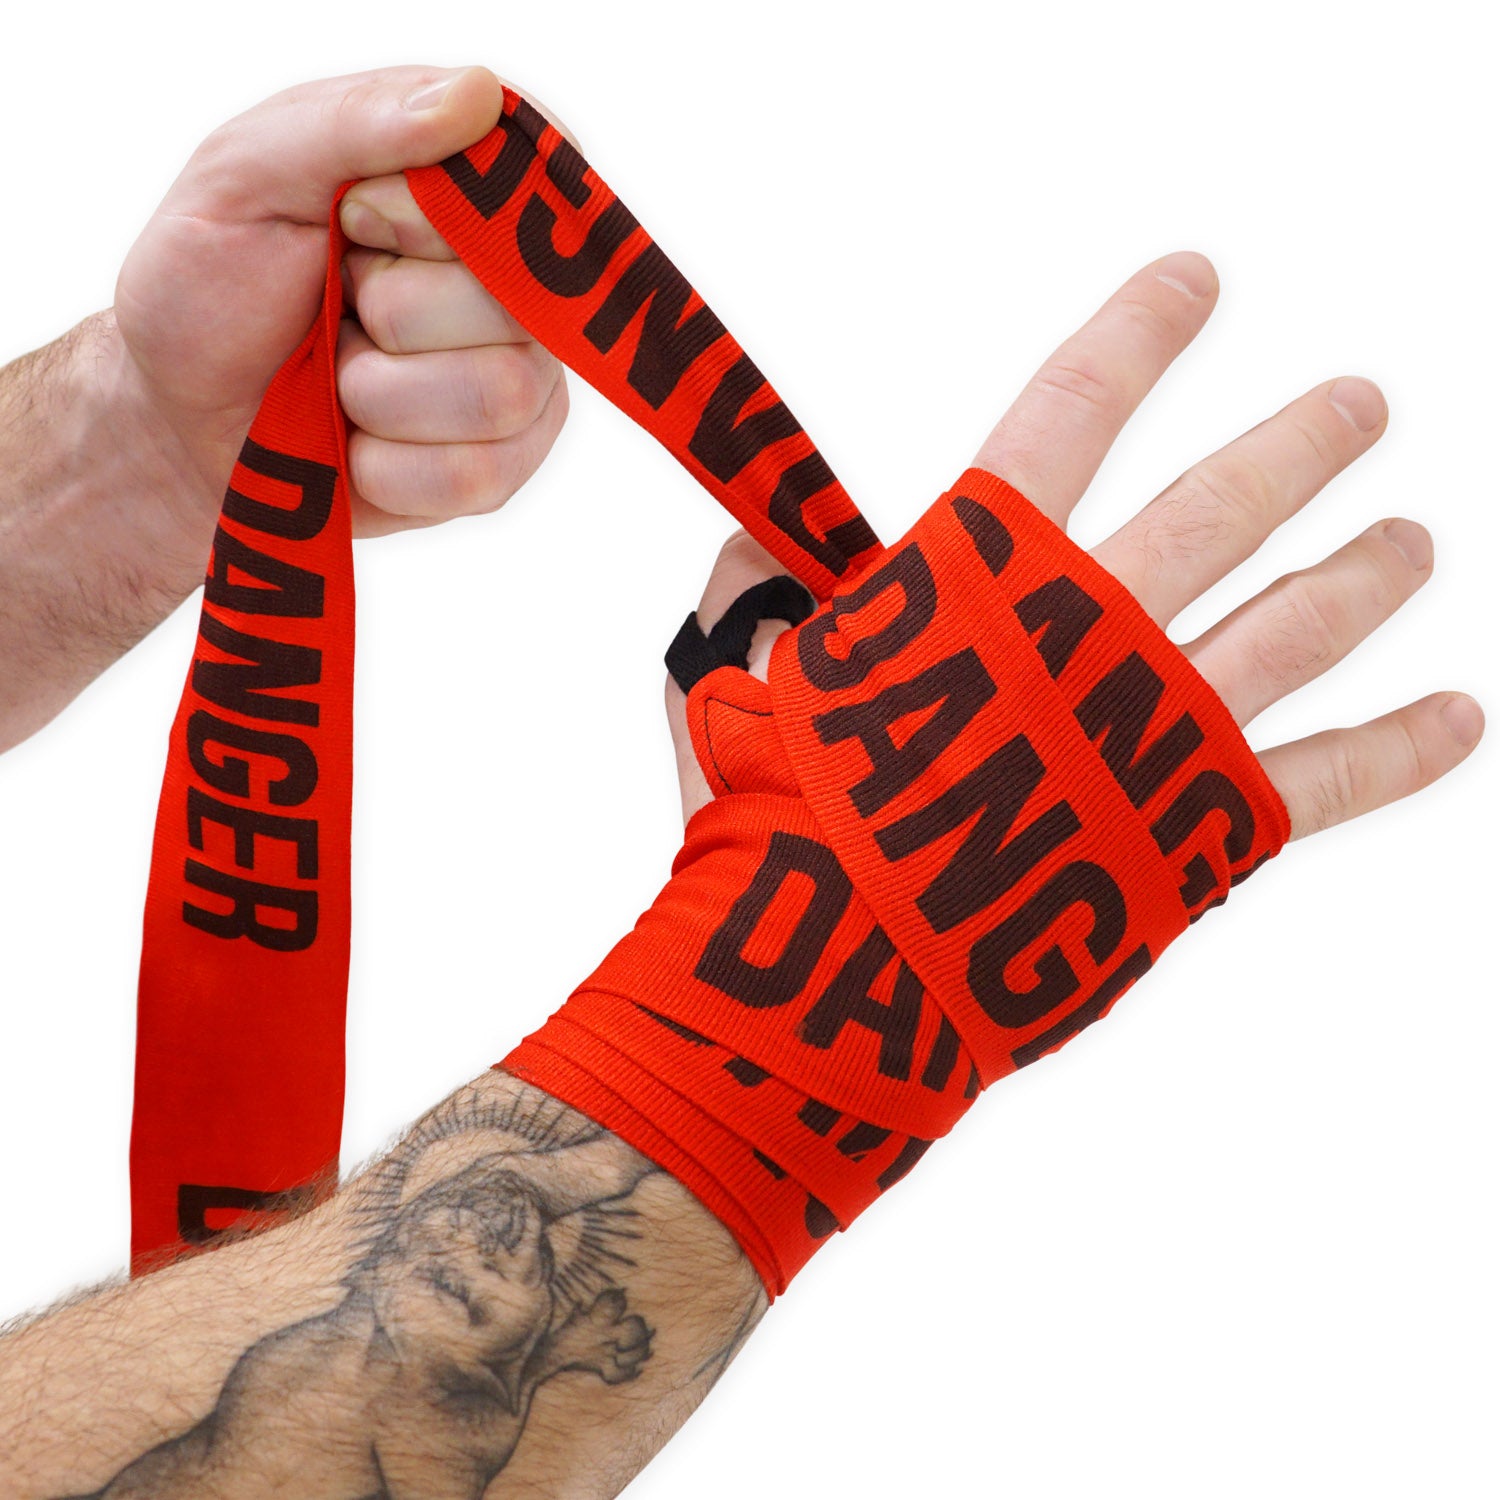 180" Semi-Elastic Hand Wraps for MMA & Boxing (Pair) - Danger Red